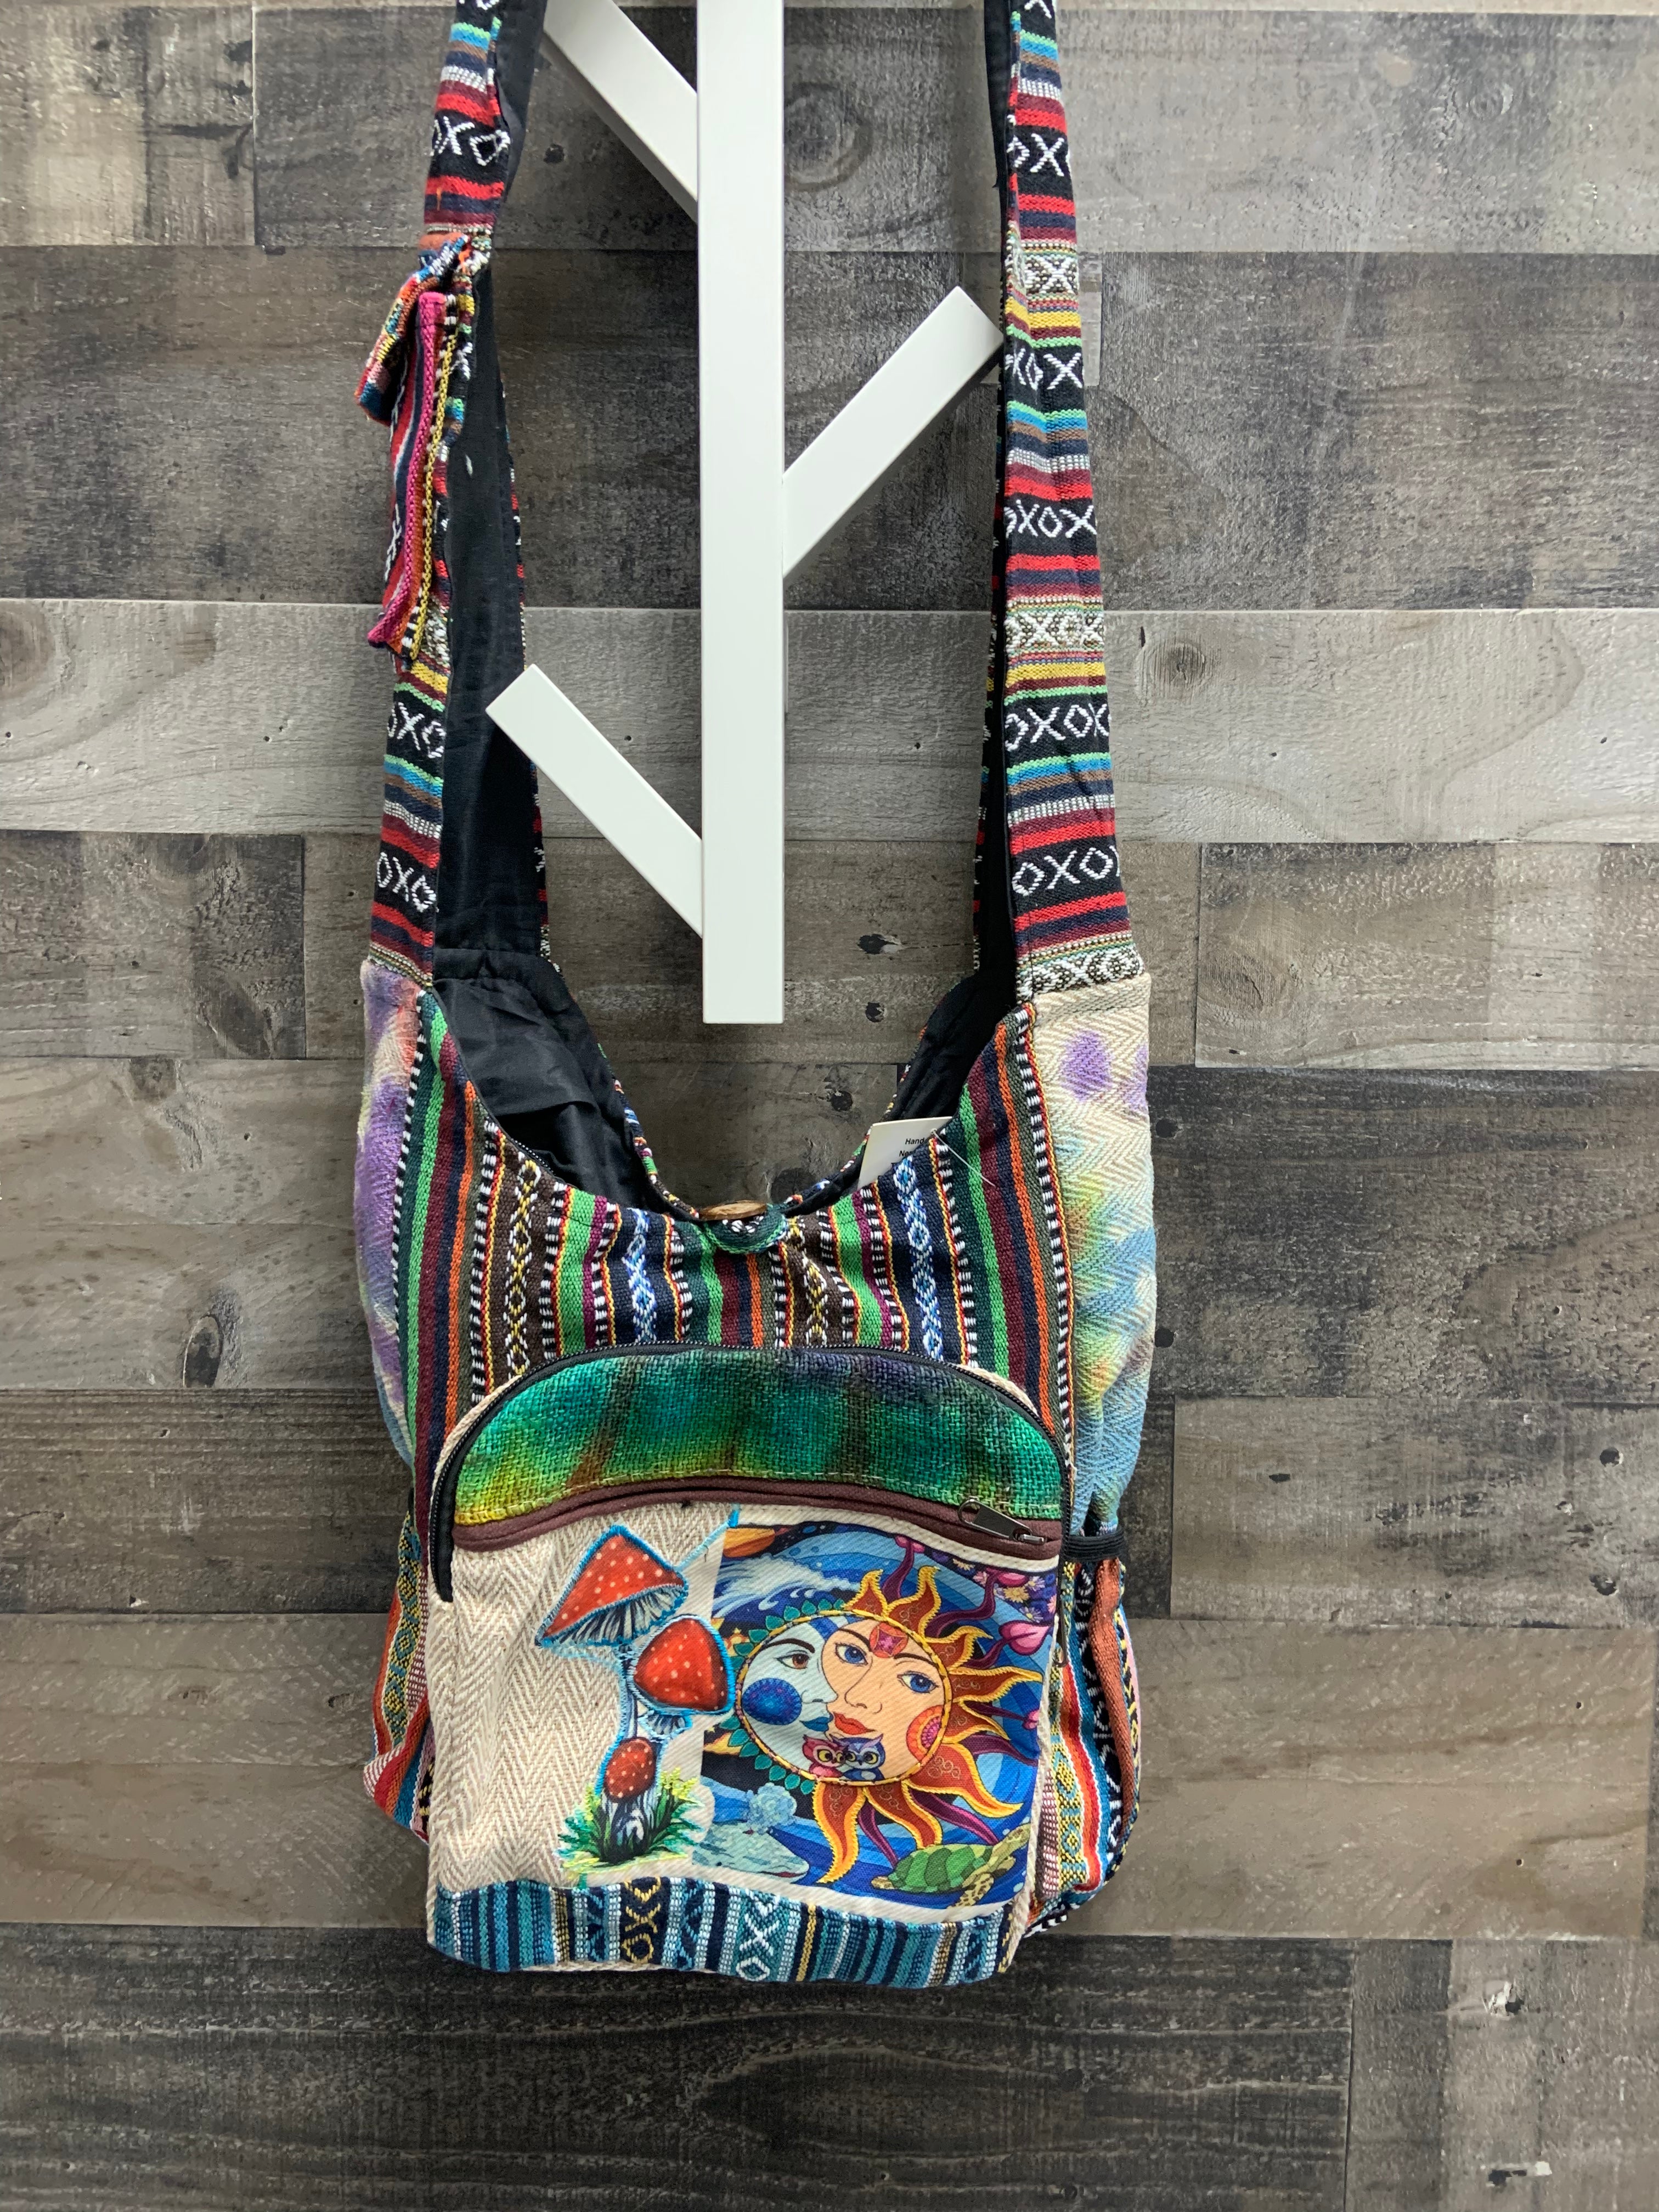 Pack of 12 Boho Hippie Bags Shoulder Handbags Fashion canvas